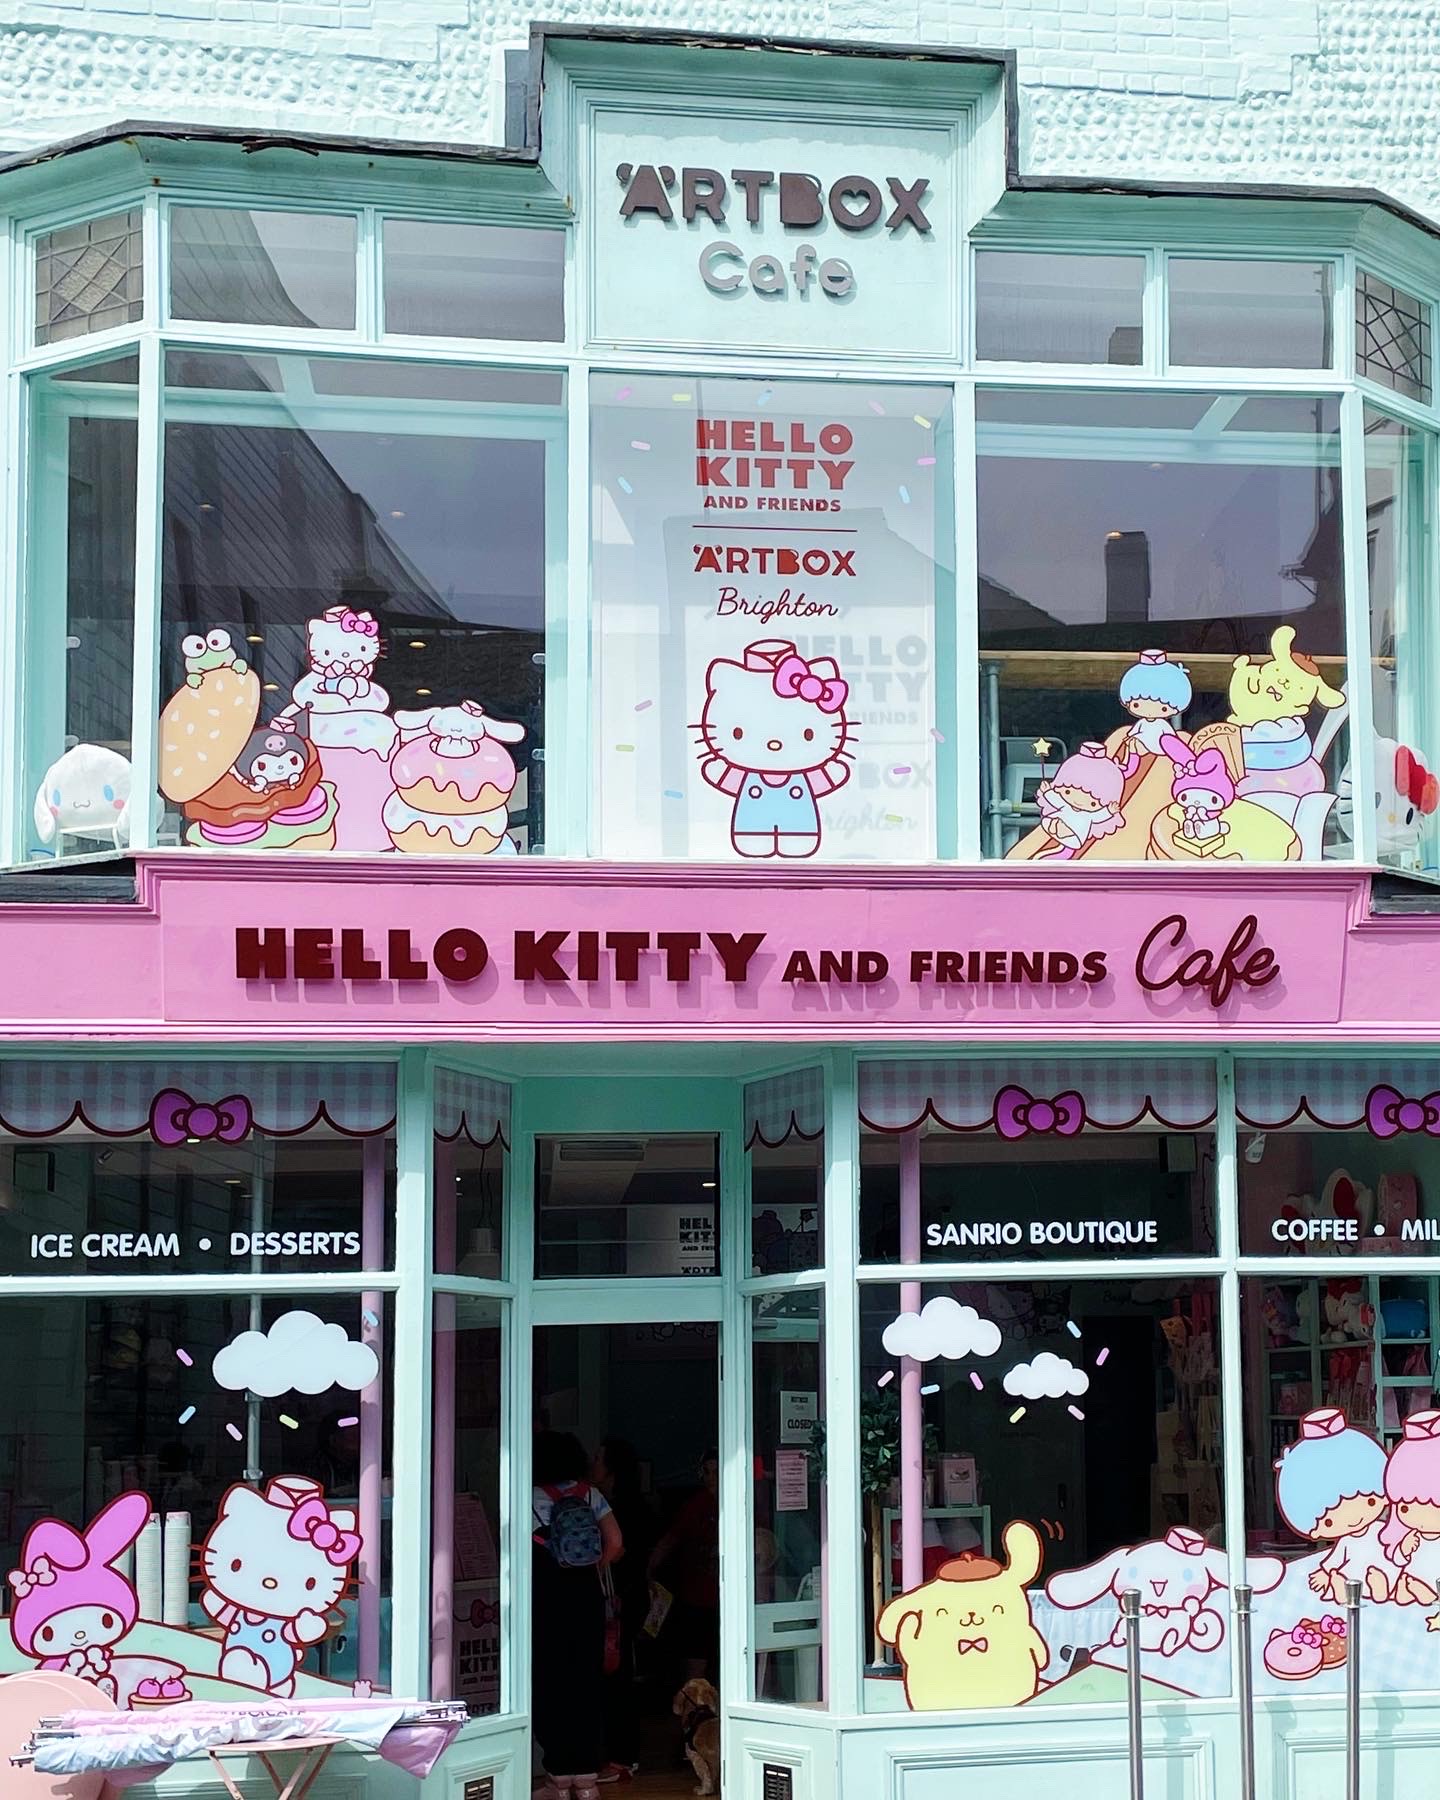 ARTBOX Cafe - We Love Brighton